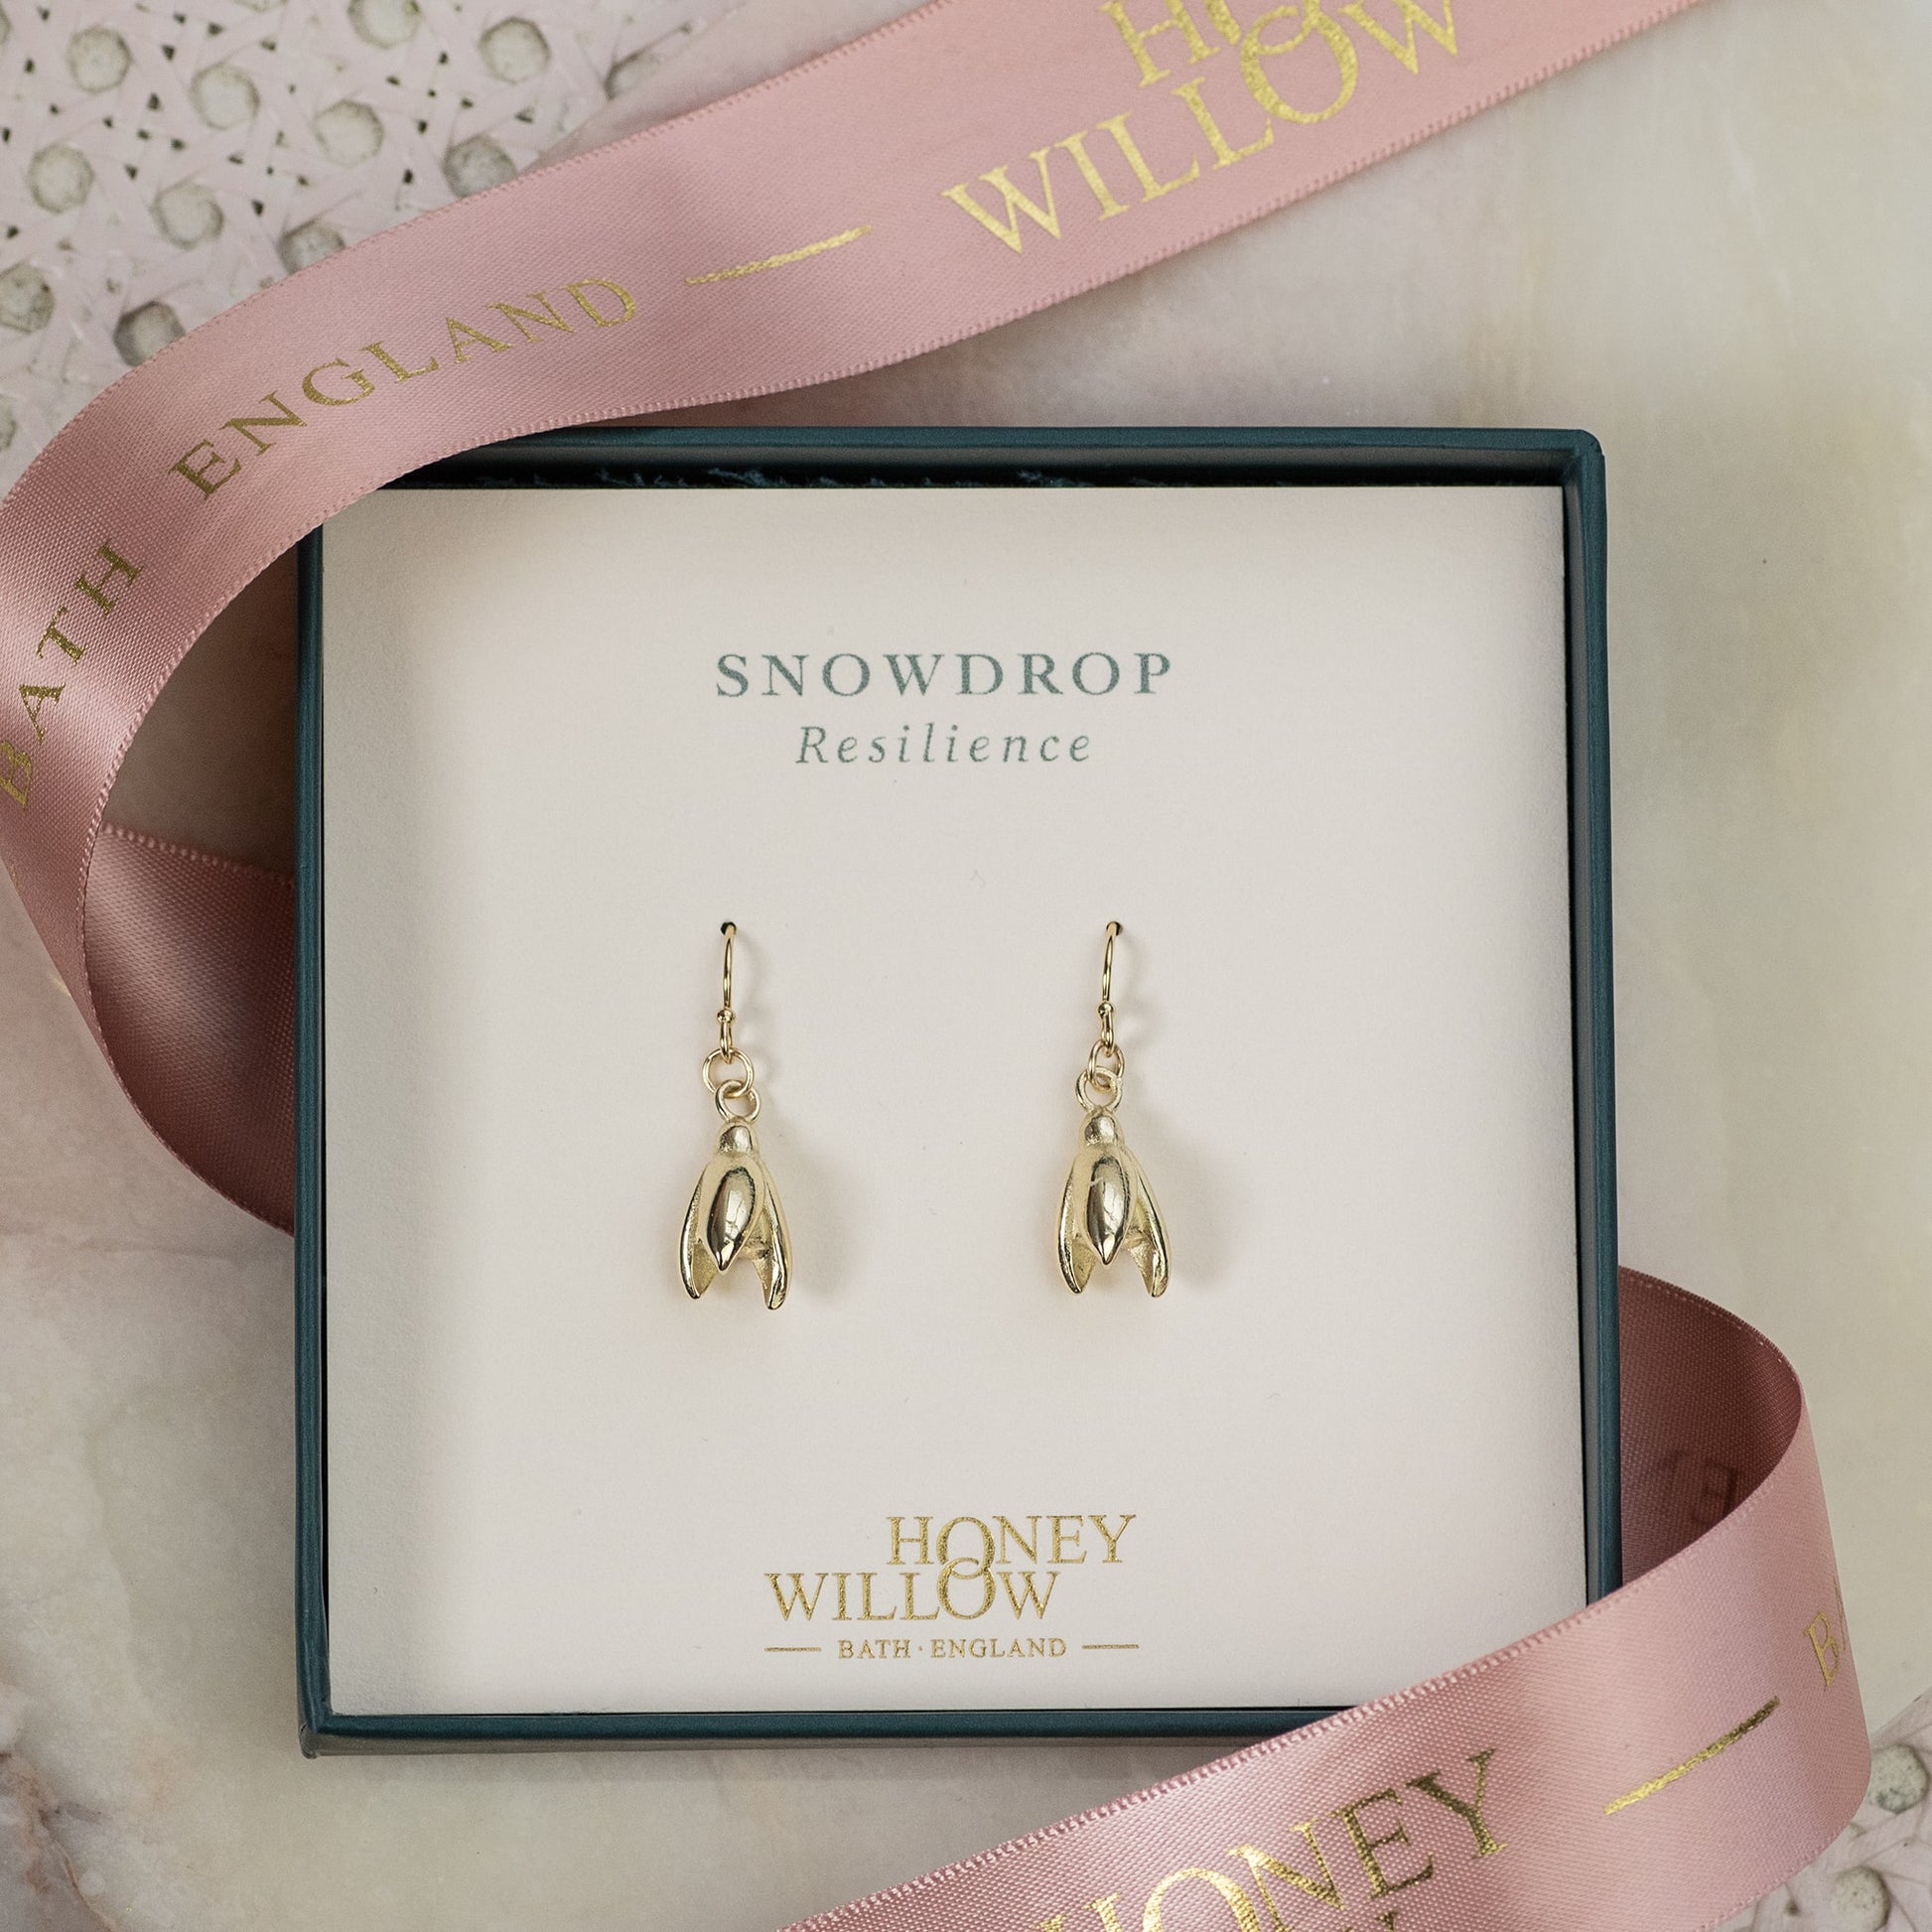 Snowdrop Flower Earrings - Resilience - 9kt Gold